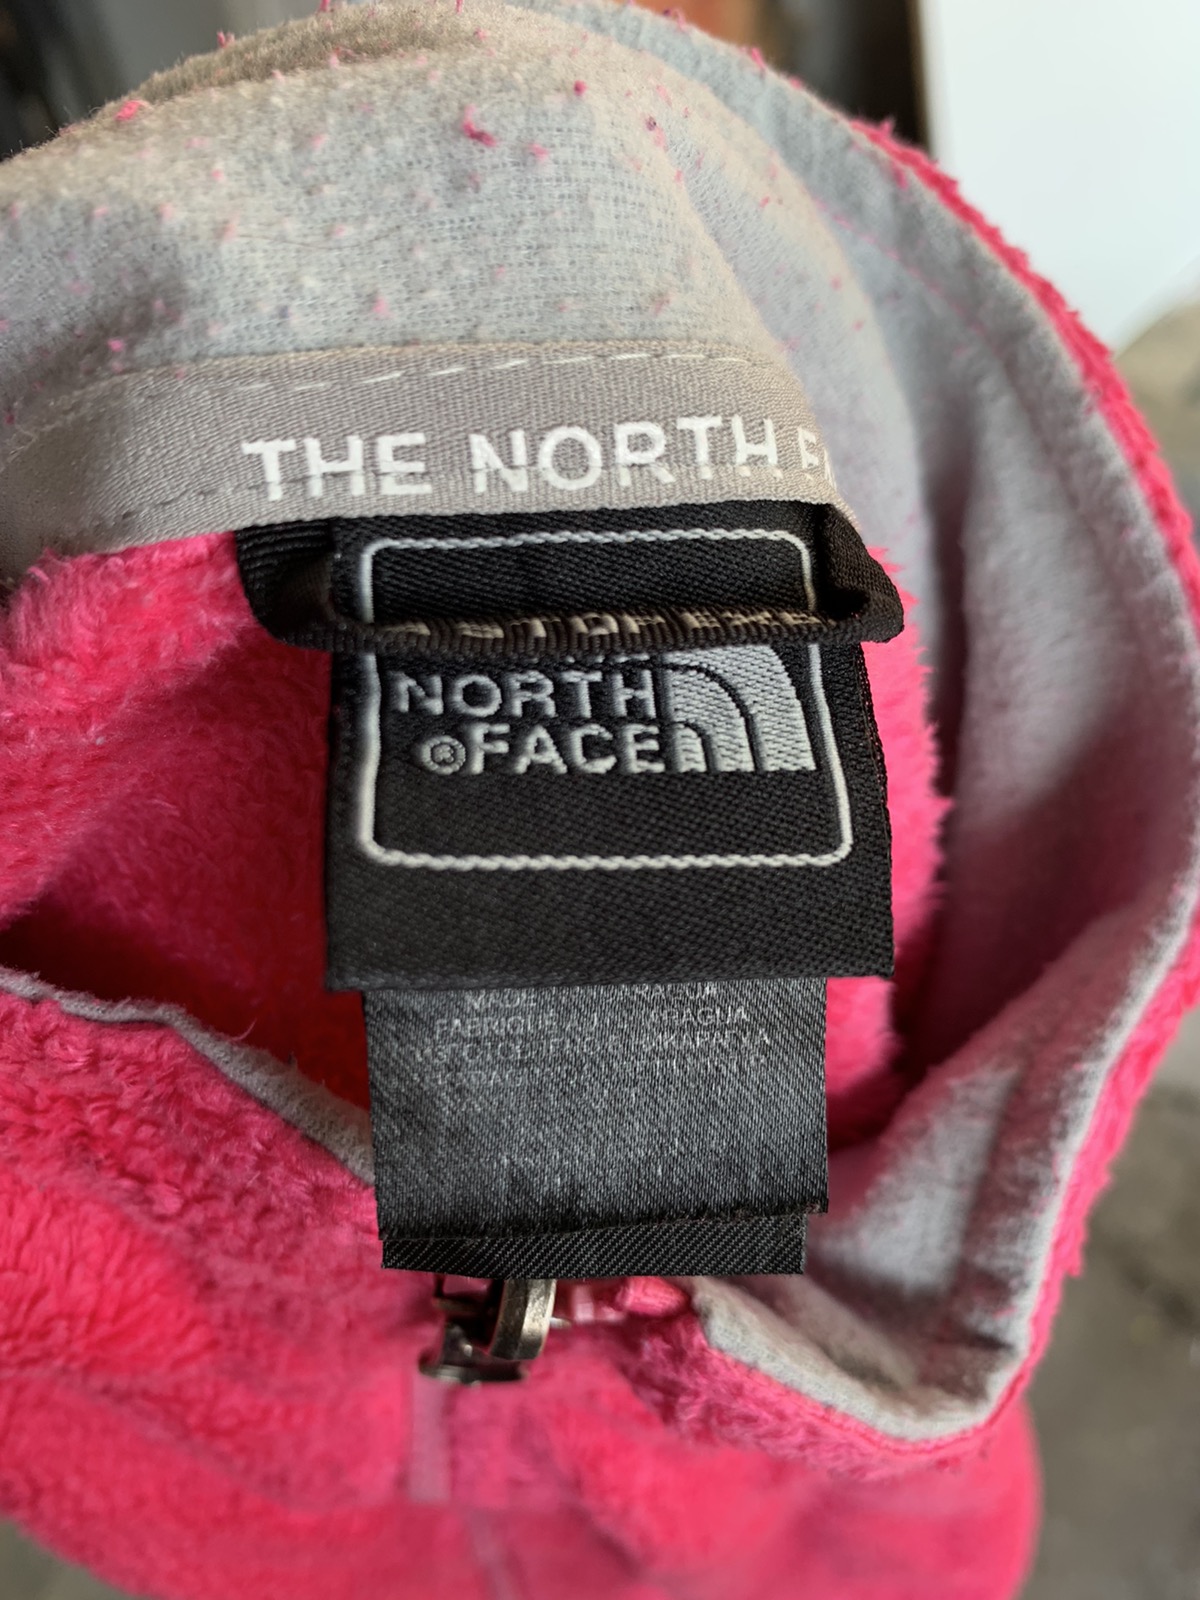 The North Face Fleece Jacket - 7